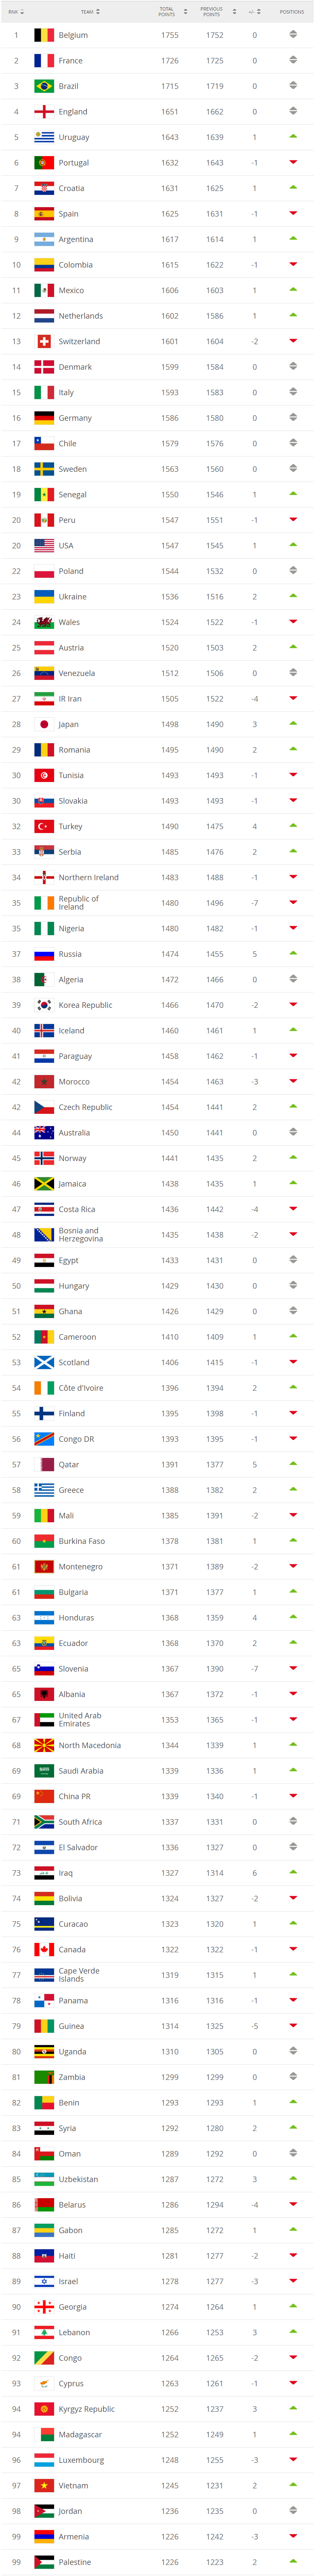 The FIFA Coca-Cola World Ranking 191015.png